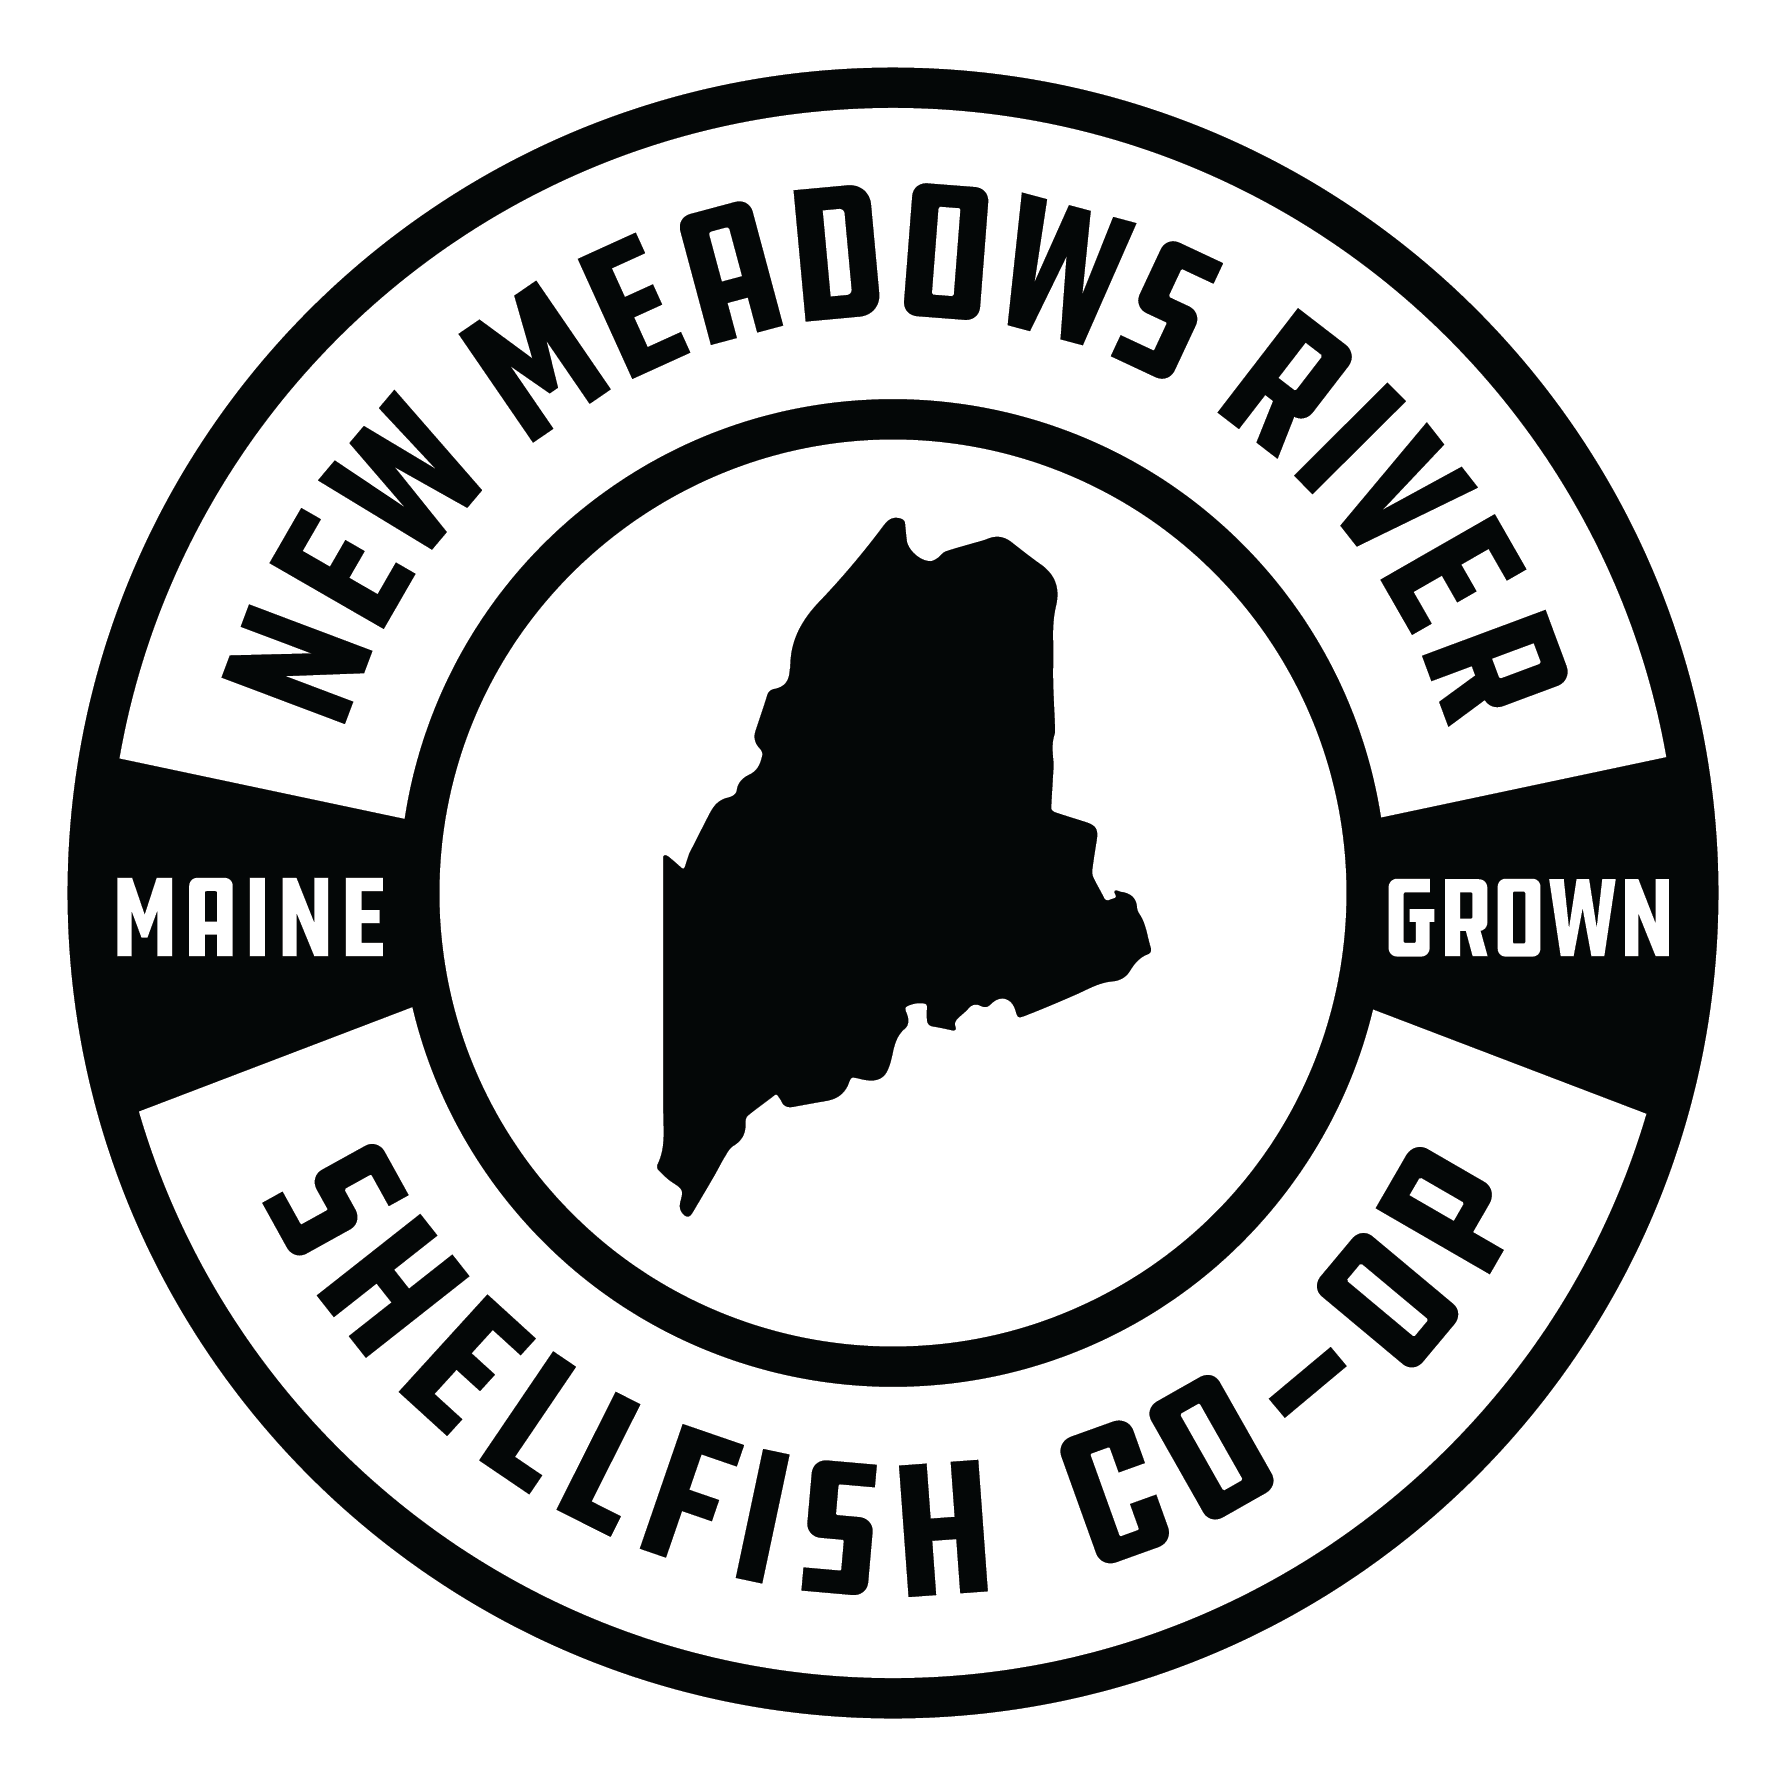 New Meadows River Shellfish Co-op Midcoast Maine